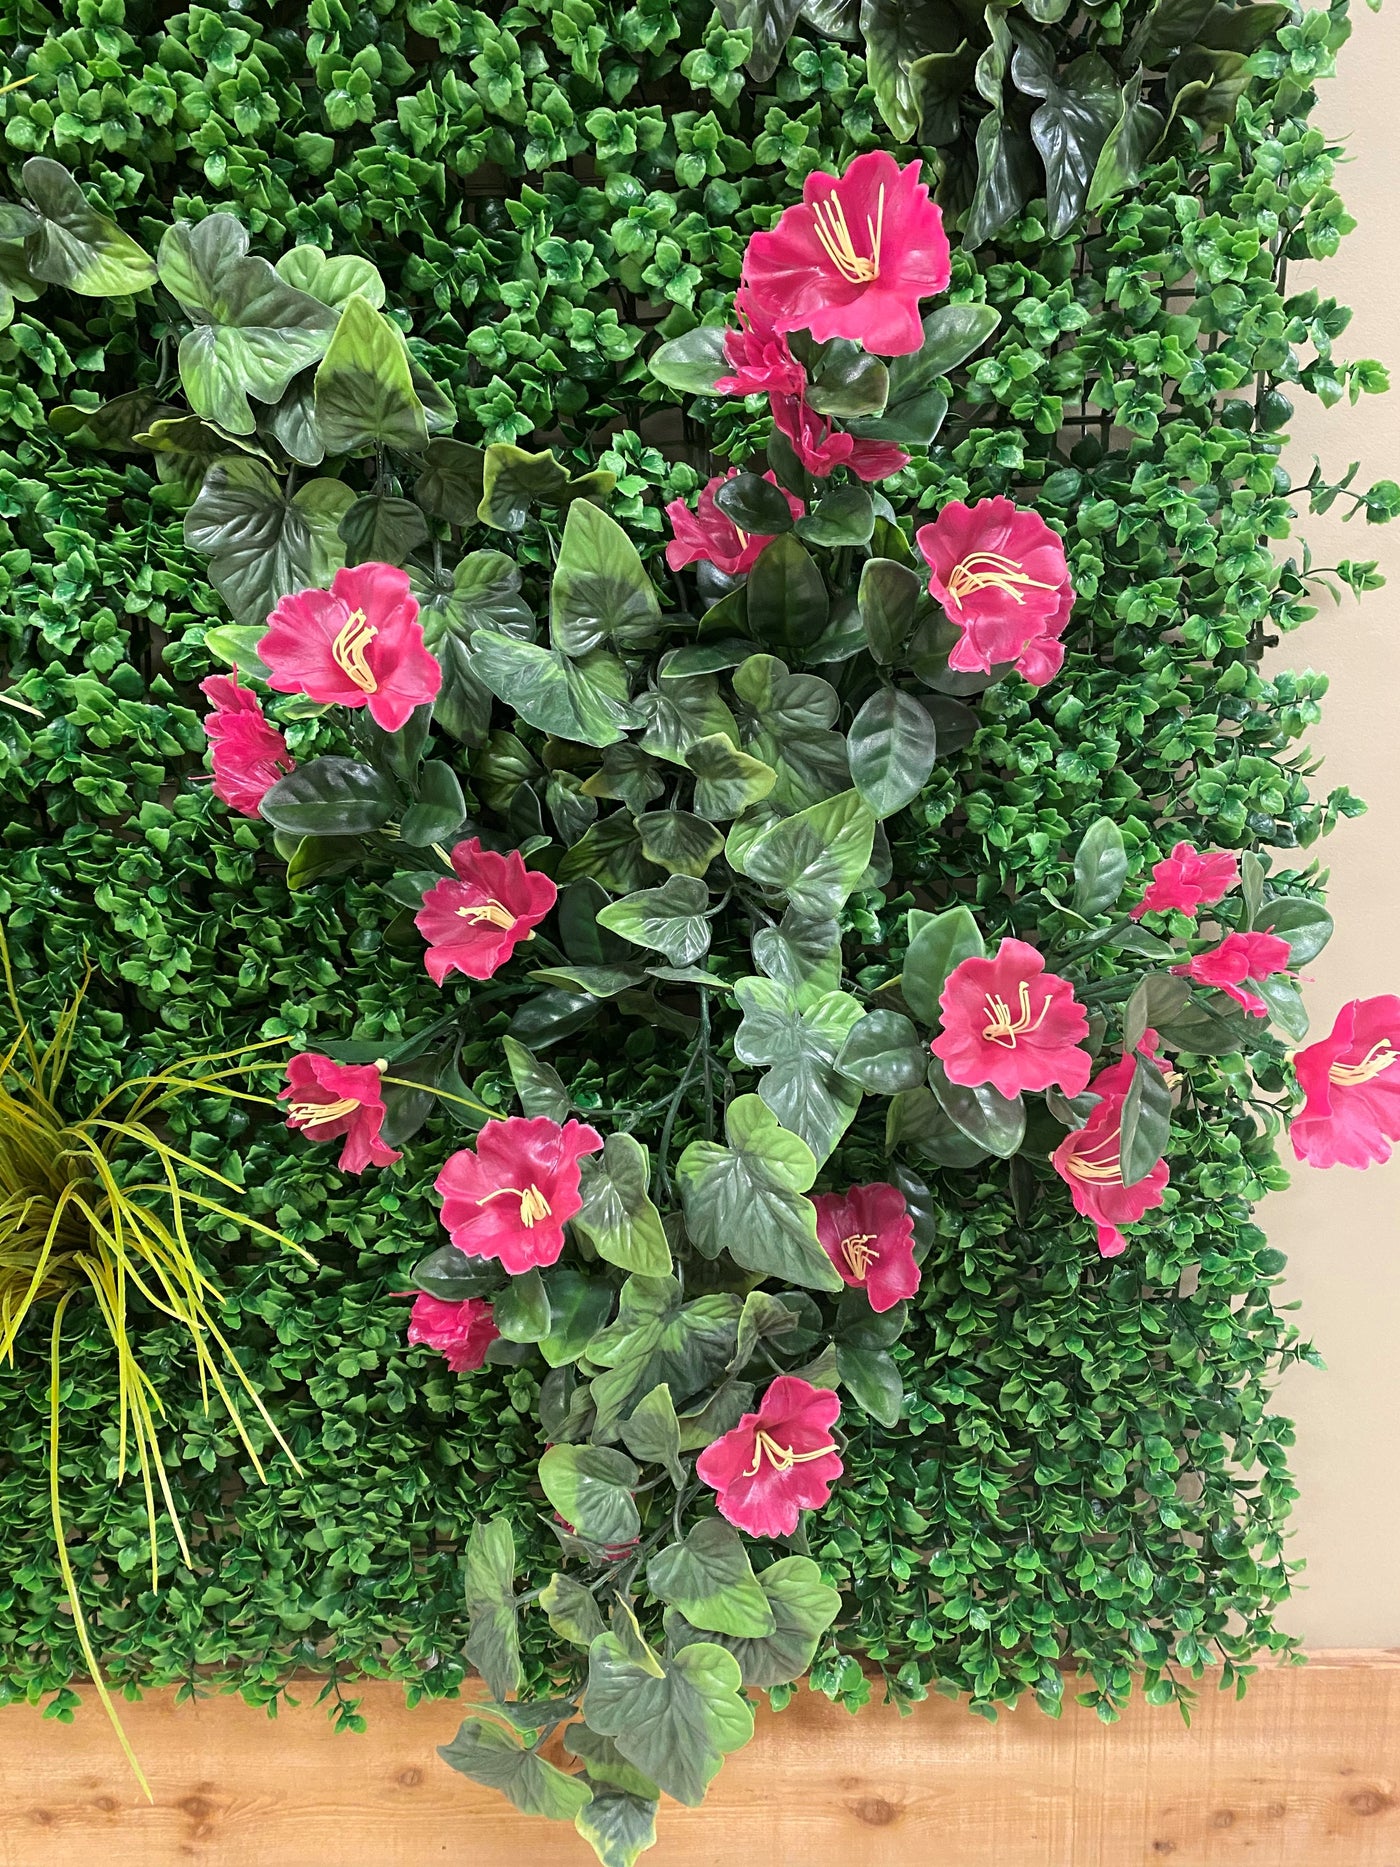 4' x 8' Green Wallscape Kit - Pachysandra, Grasses, Ivy, Pink Petunia